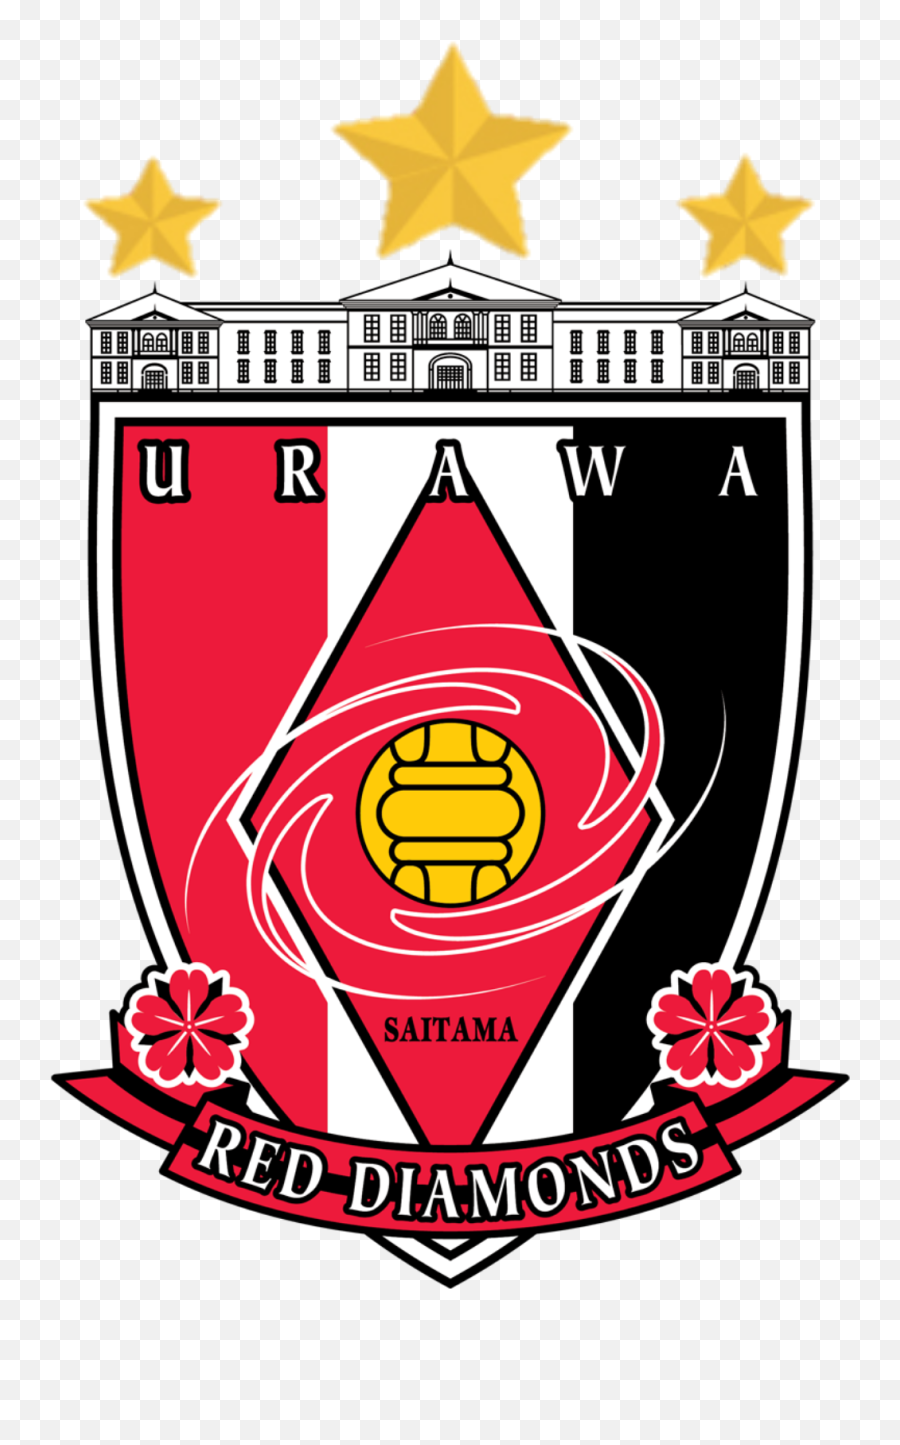 Urawa Red Diamonds Vs Kawasaki Frontale - Urawa Red Diamonds Logo Png,Diamonds Falling Png